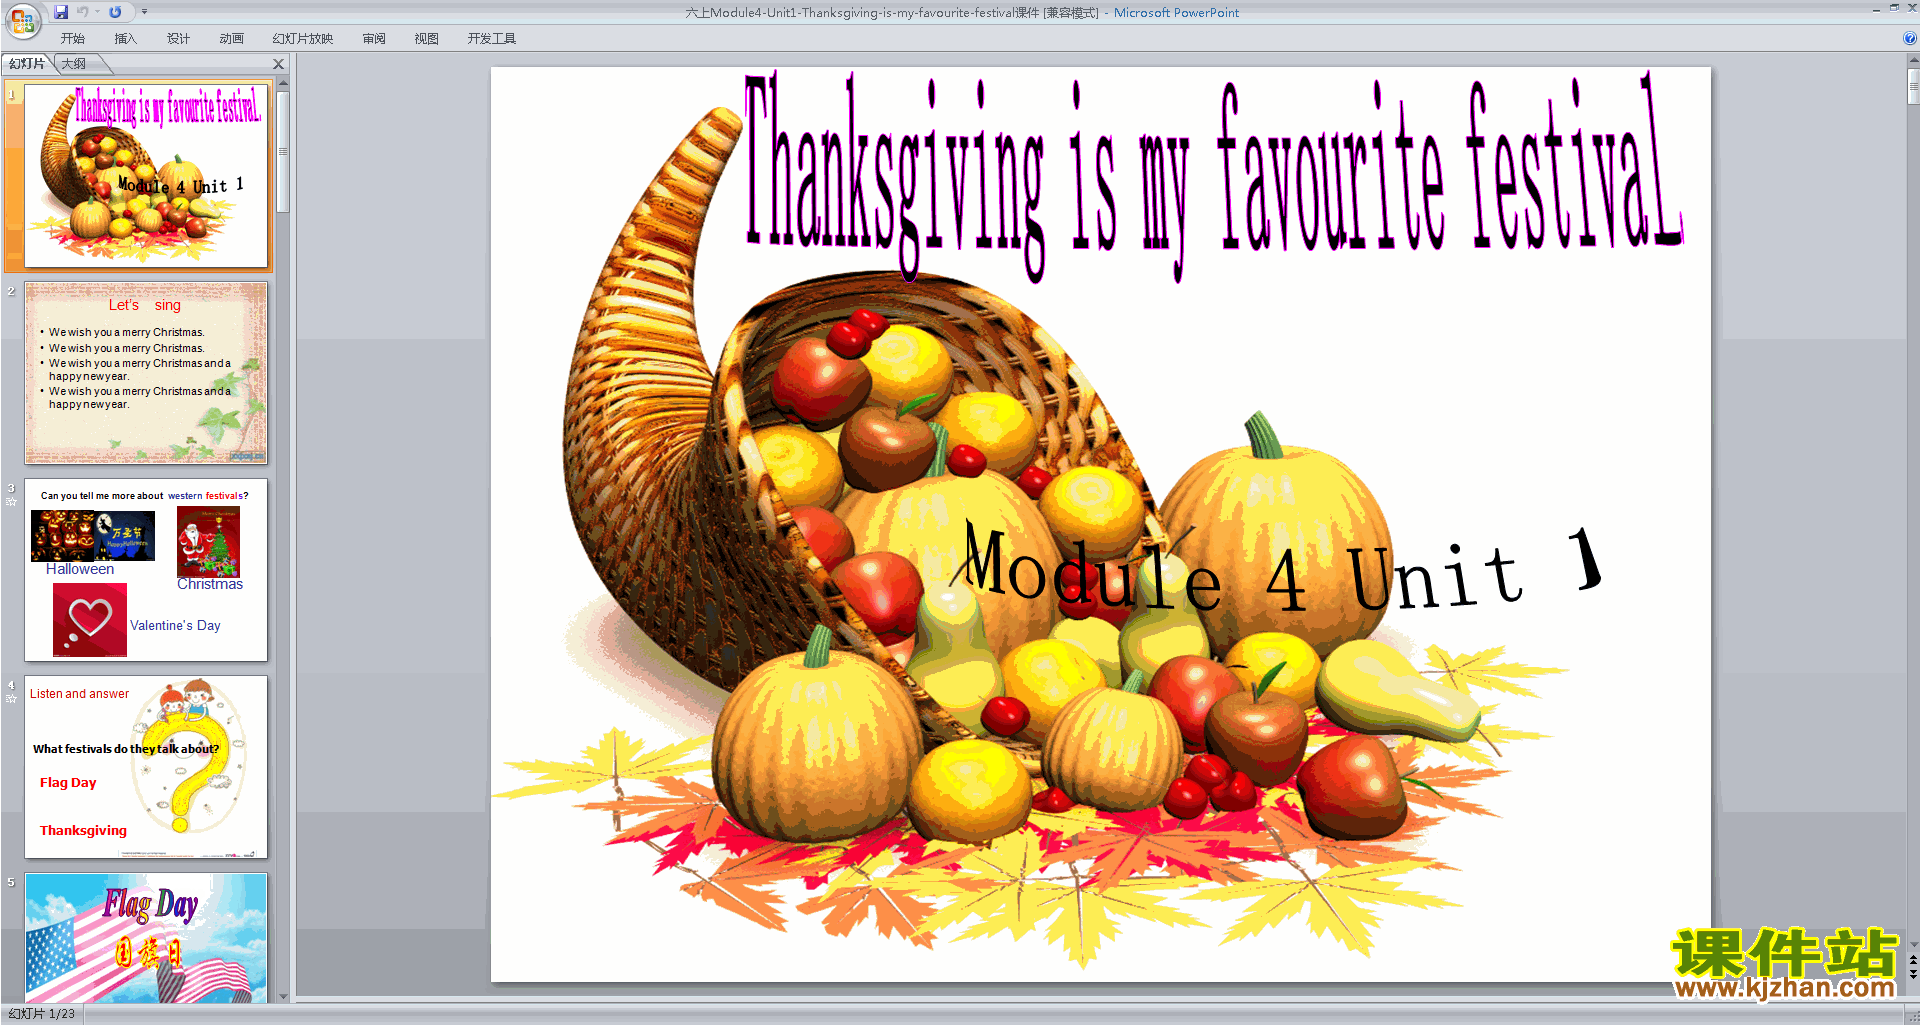 Module4 Thanksgiving is my favourite festivalpptμ16